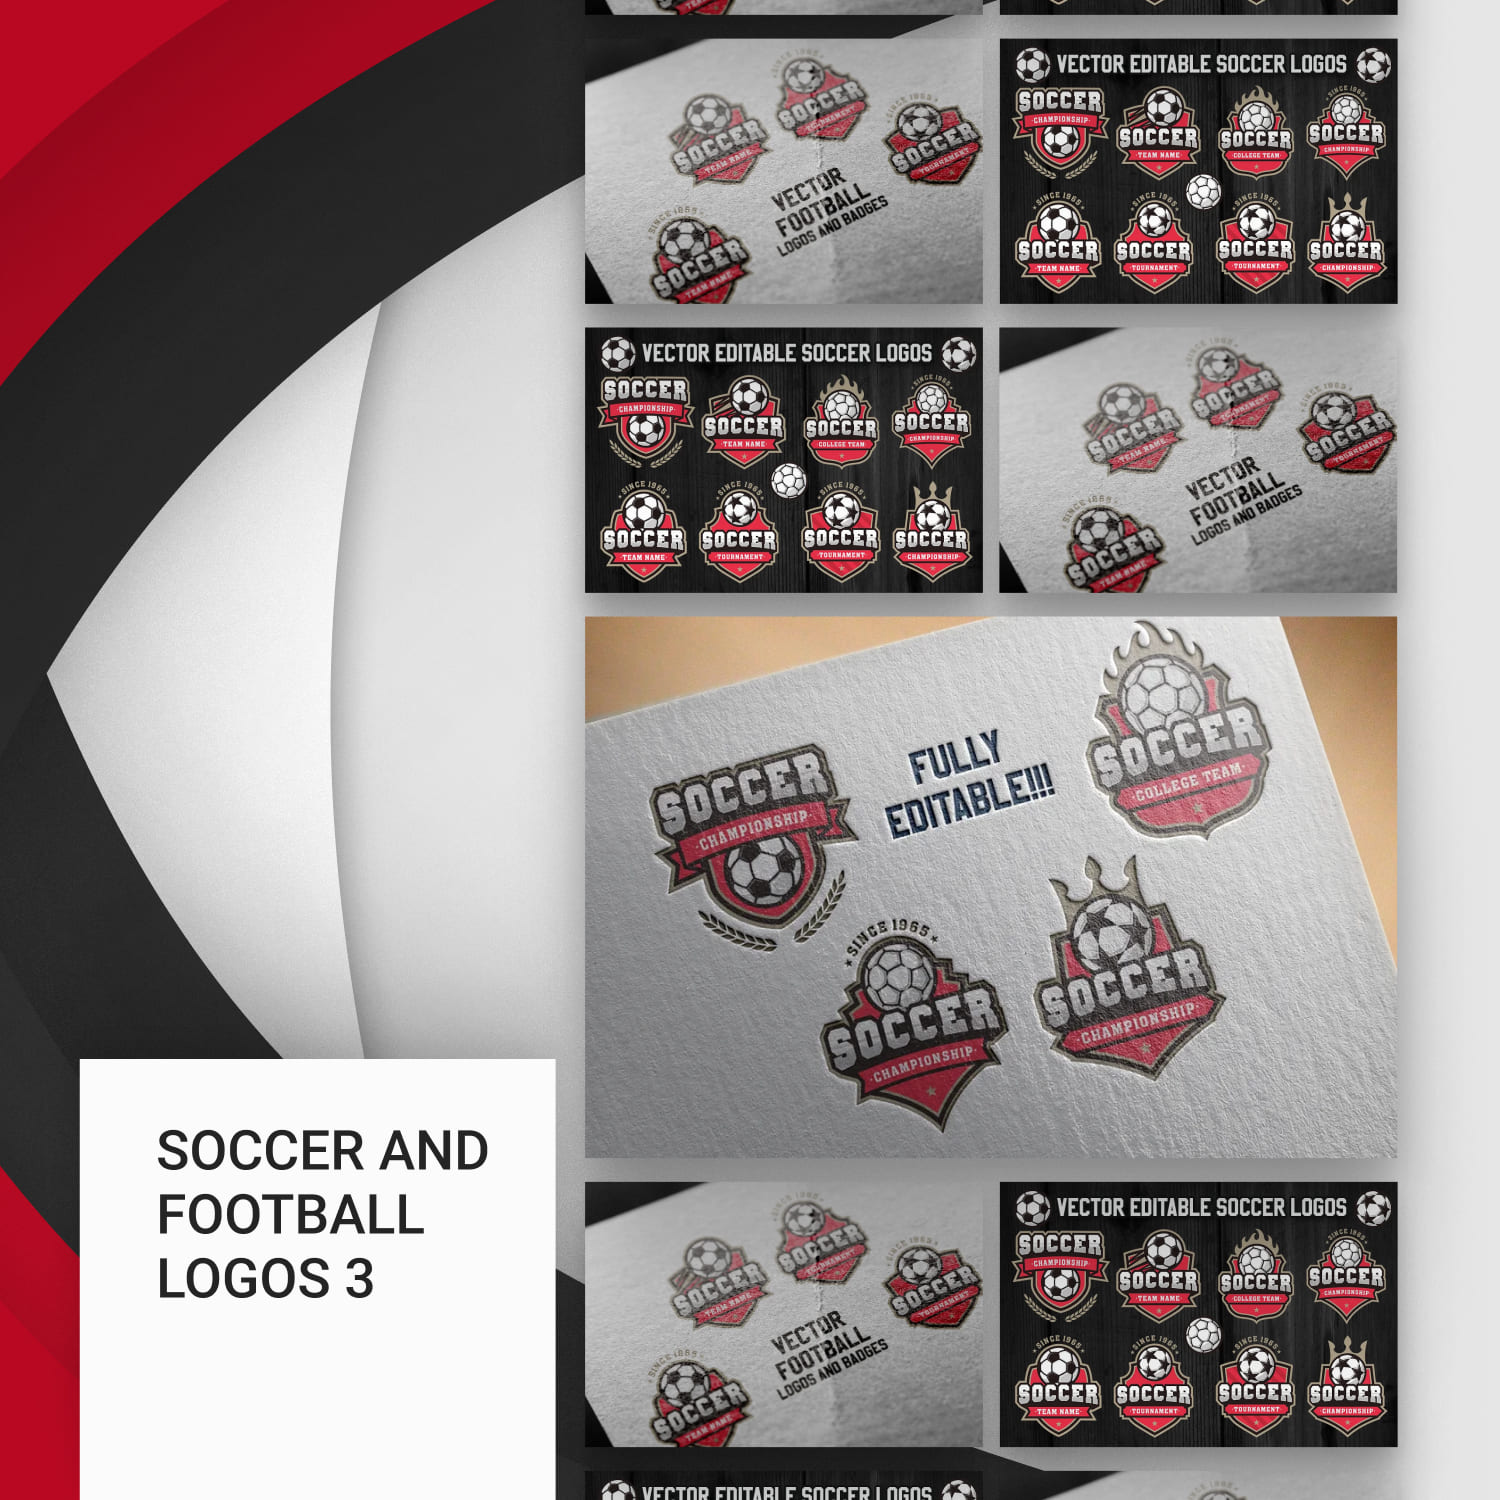 Soccer and Football Logos 3.